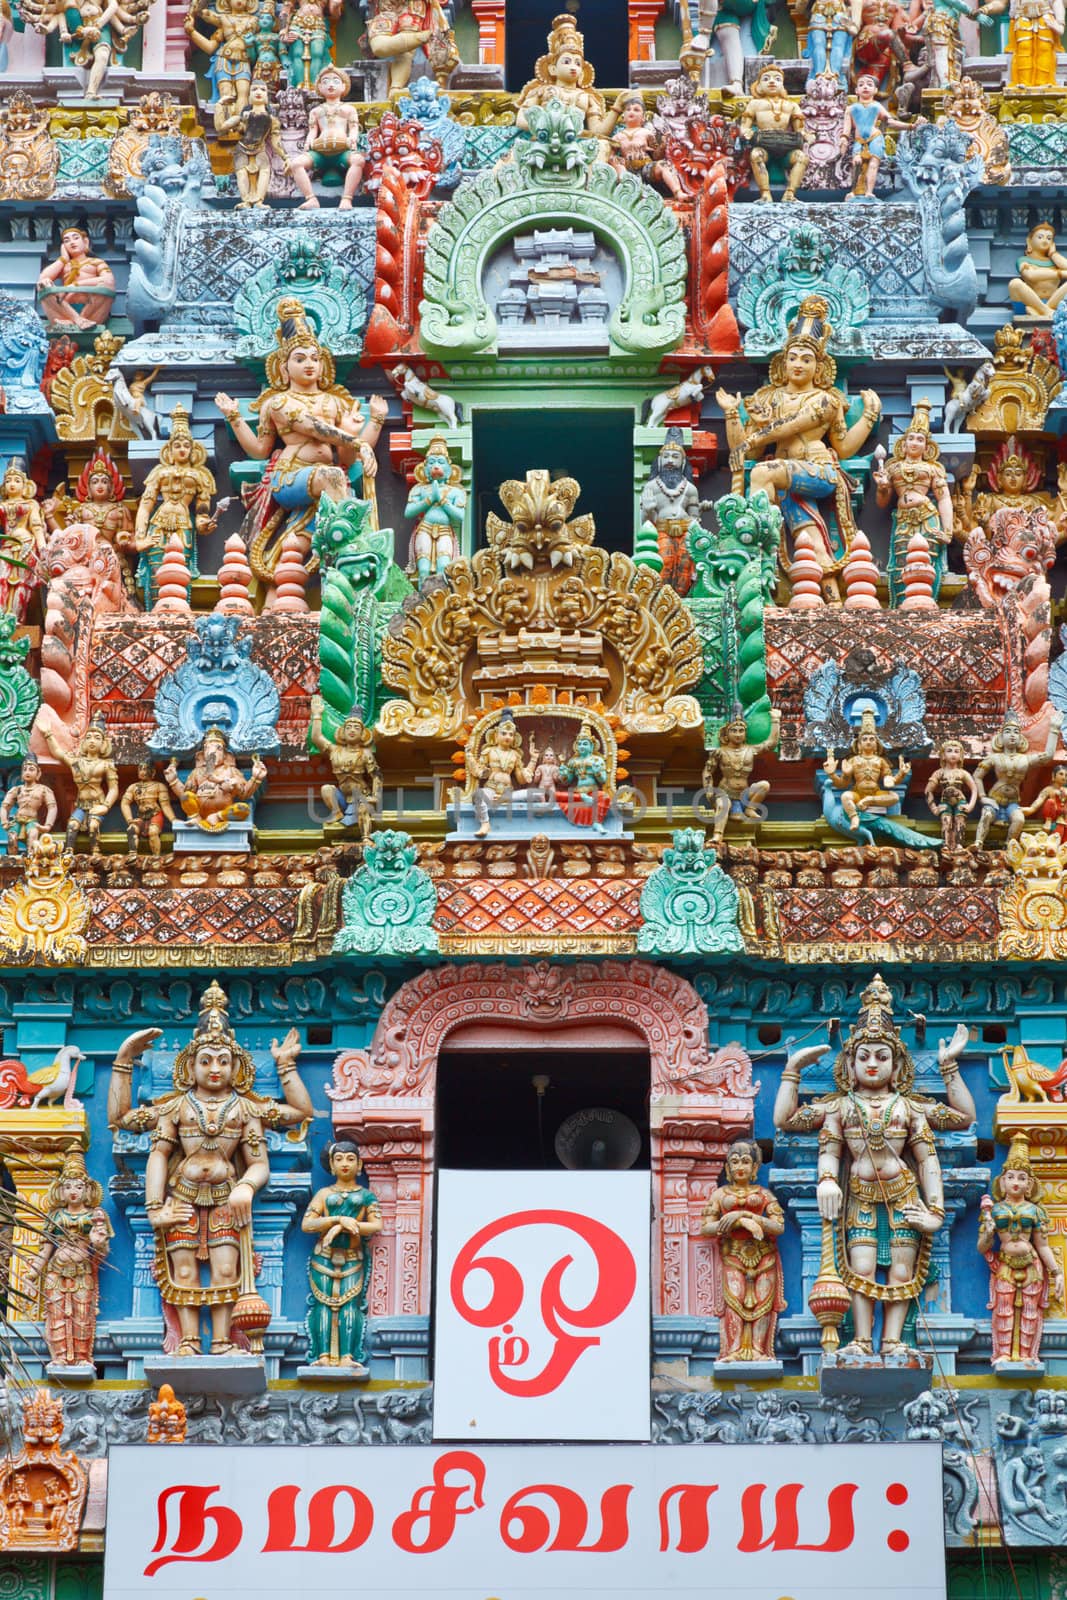 Sculptures on Hindu temple gopura (tower). Jambukeshwarar temple. Madurai, Tamil Nadu, India. Text in Tamil says "Om Namah Shivaya" mantra which means " I worship Shiva"